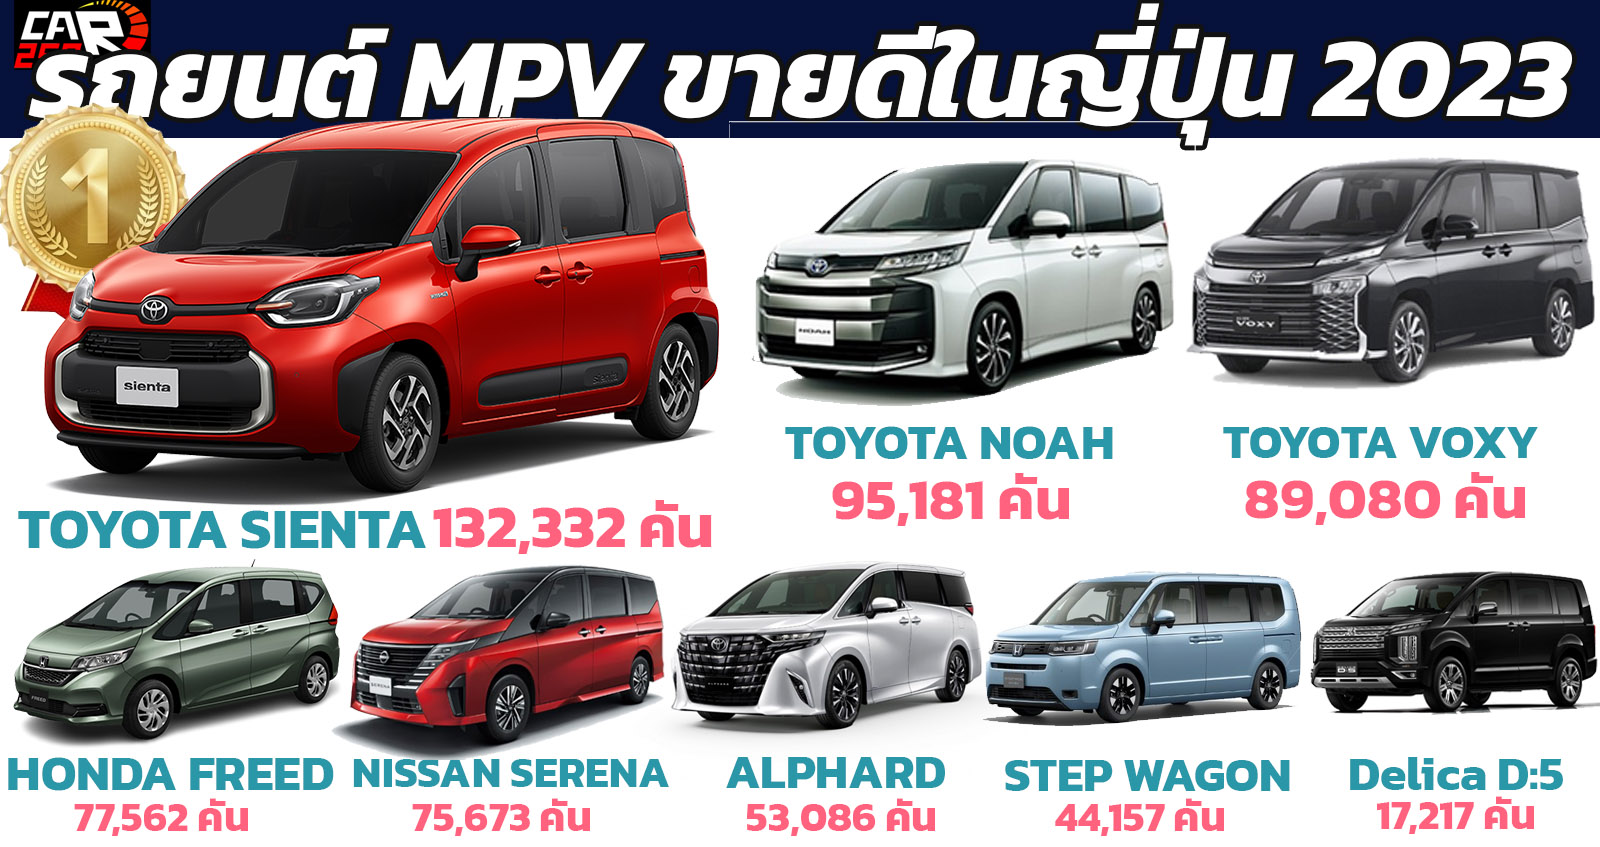 TOYOTA Sienta MPV ขายดีสุดในประเทศญี่ปุ่น ประจำปี 2023 ยอดกว่า 132,332 คัน